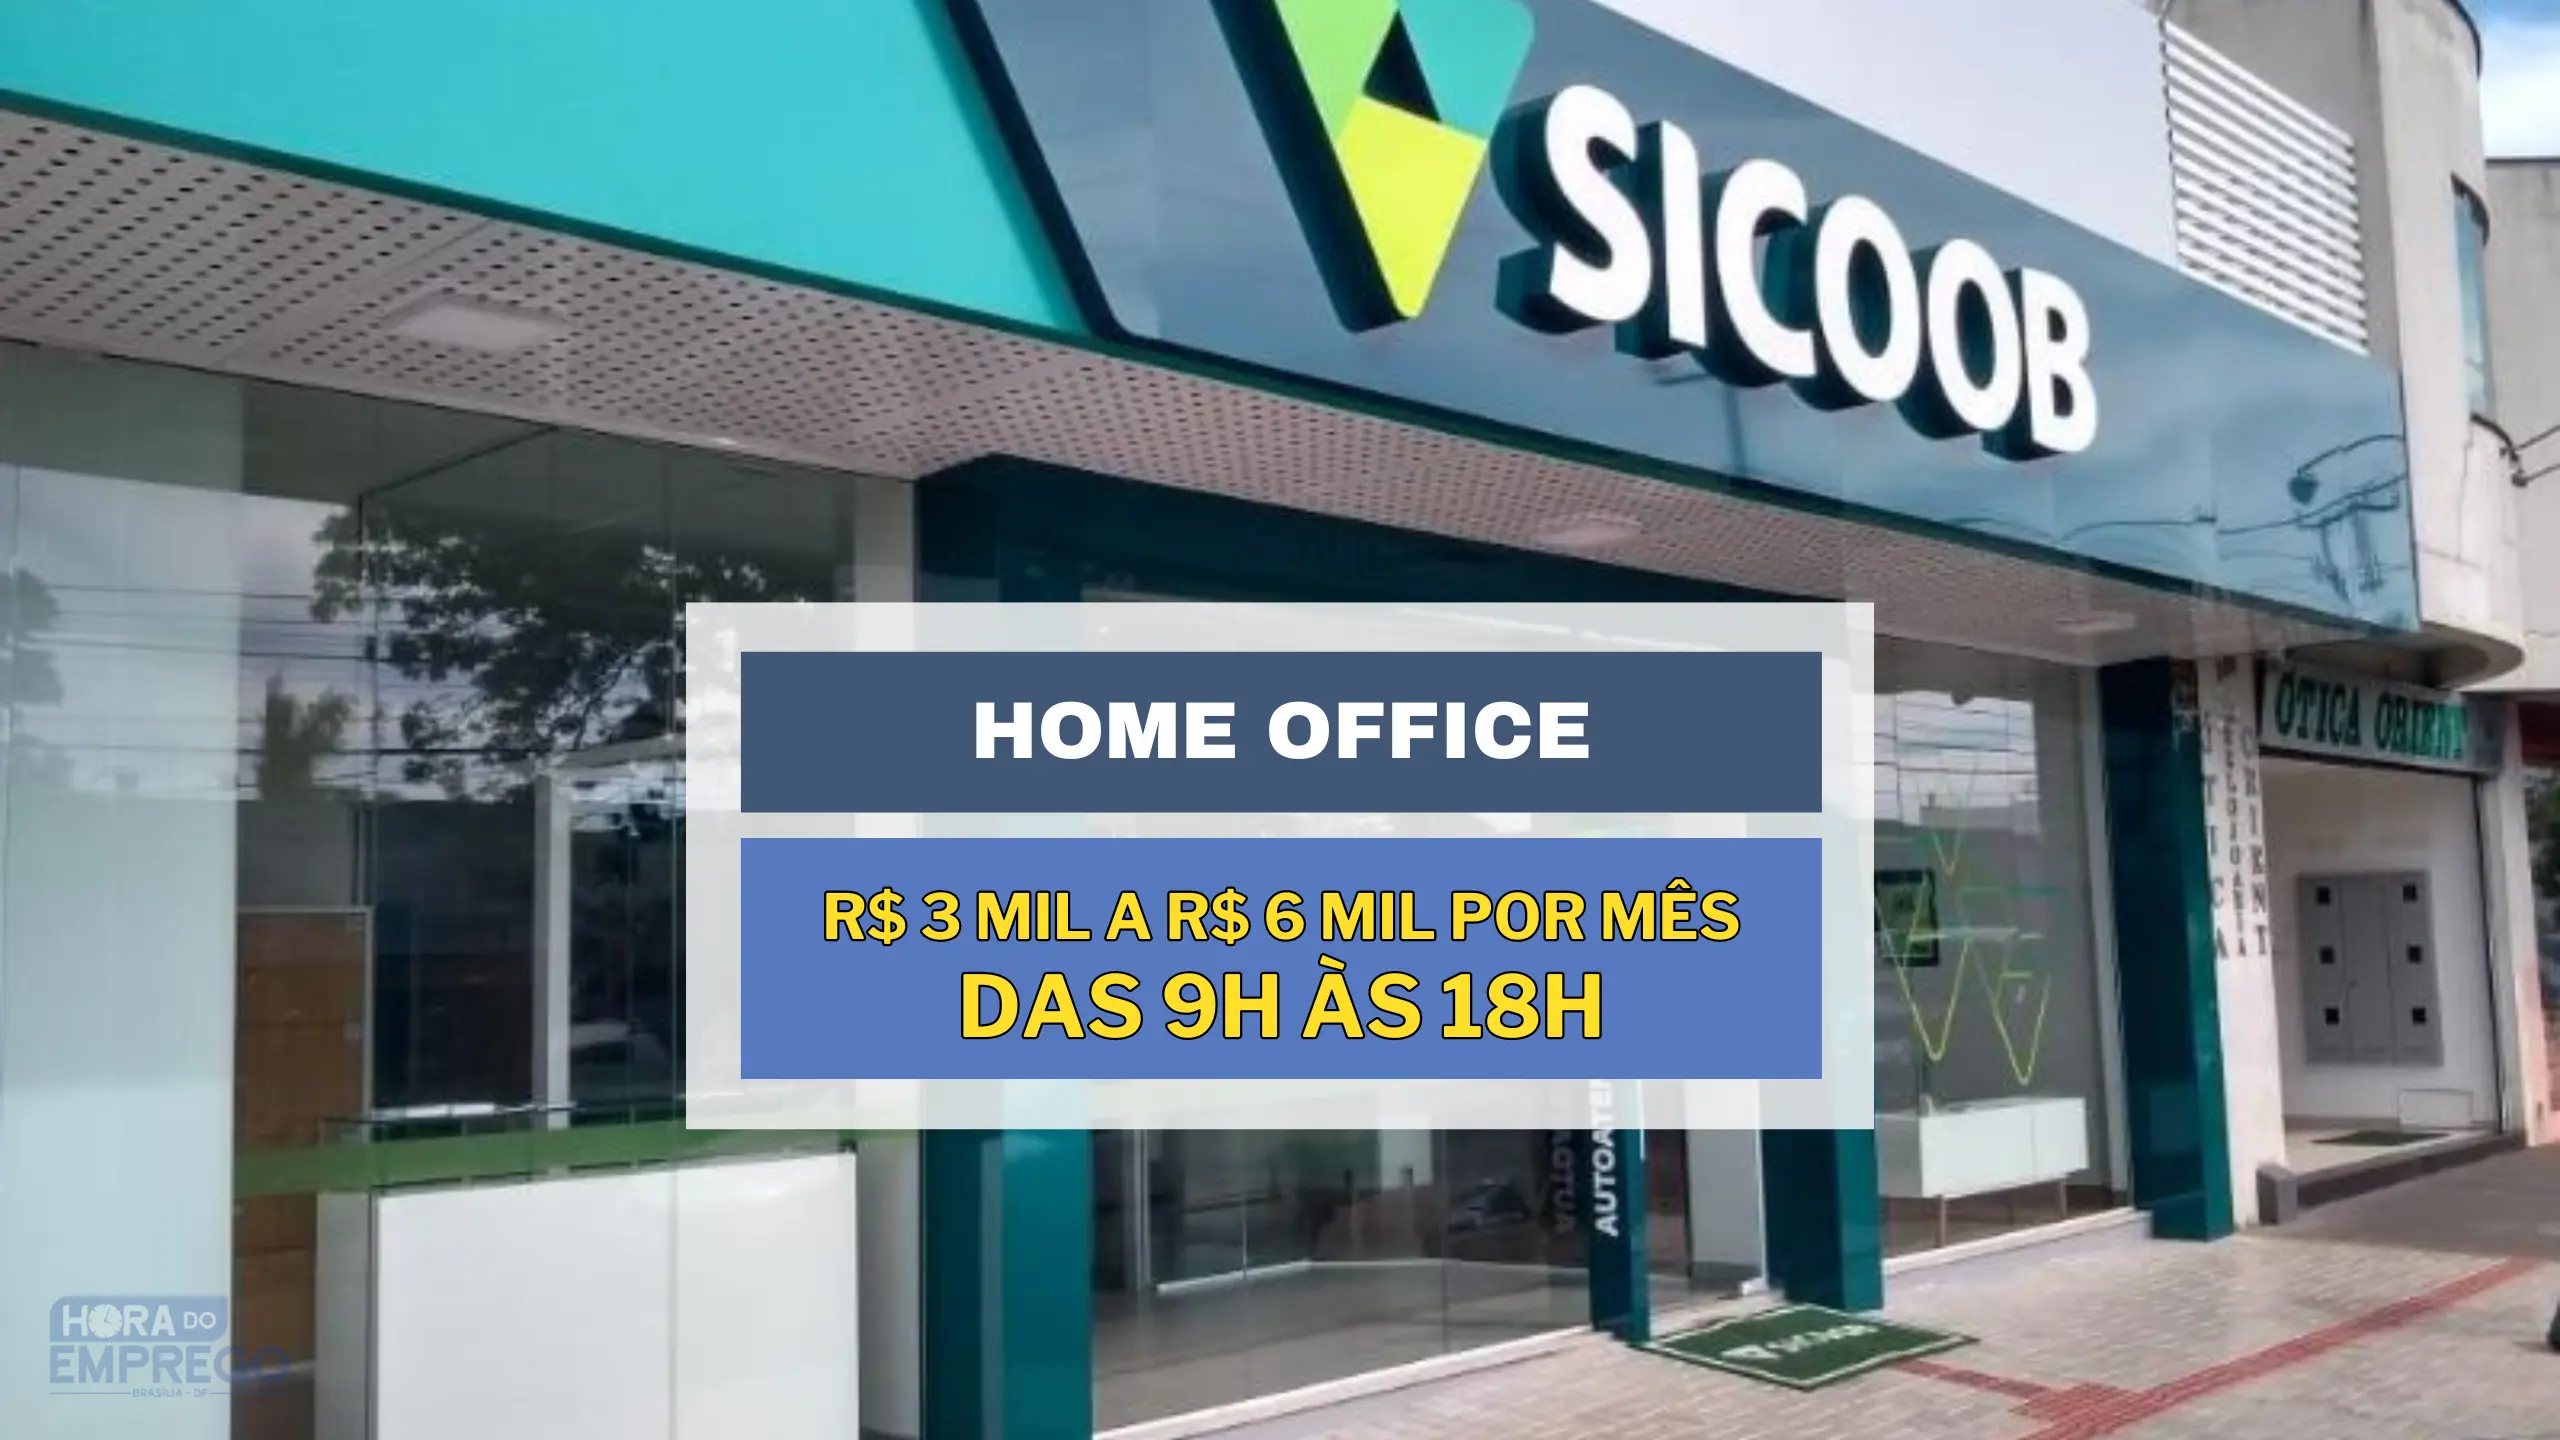 Banco Sicoob abre vaga HOME OFFICE com salário de R$ 3 mil a R$ 6 mil por mês das 9h às 18h para Analista